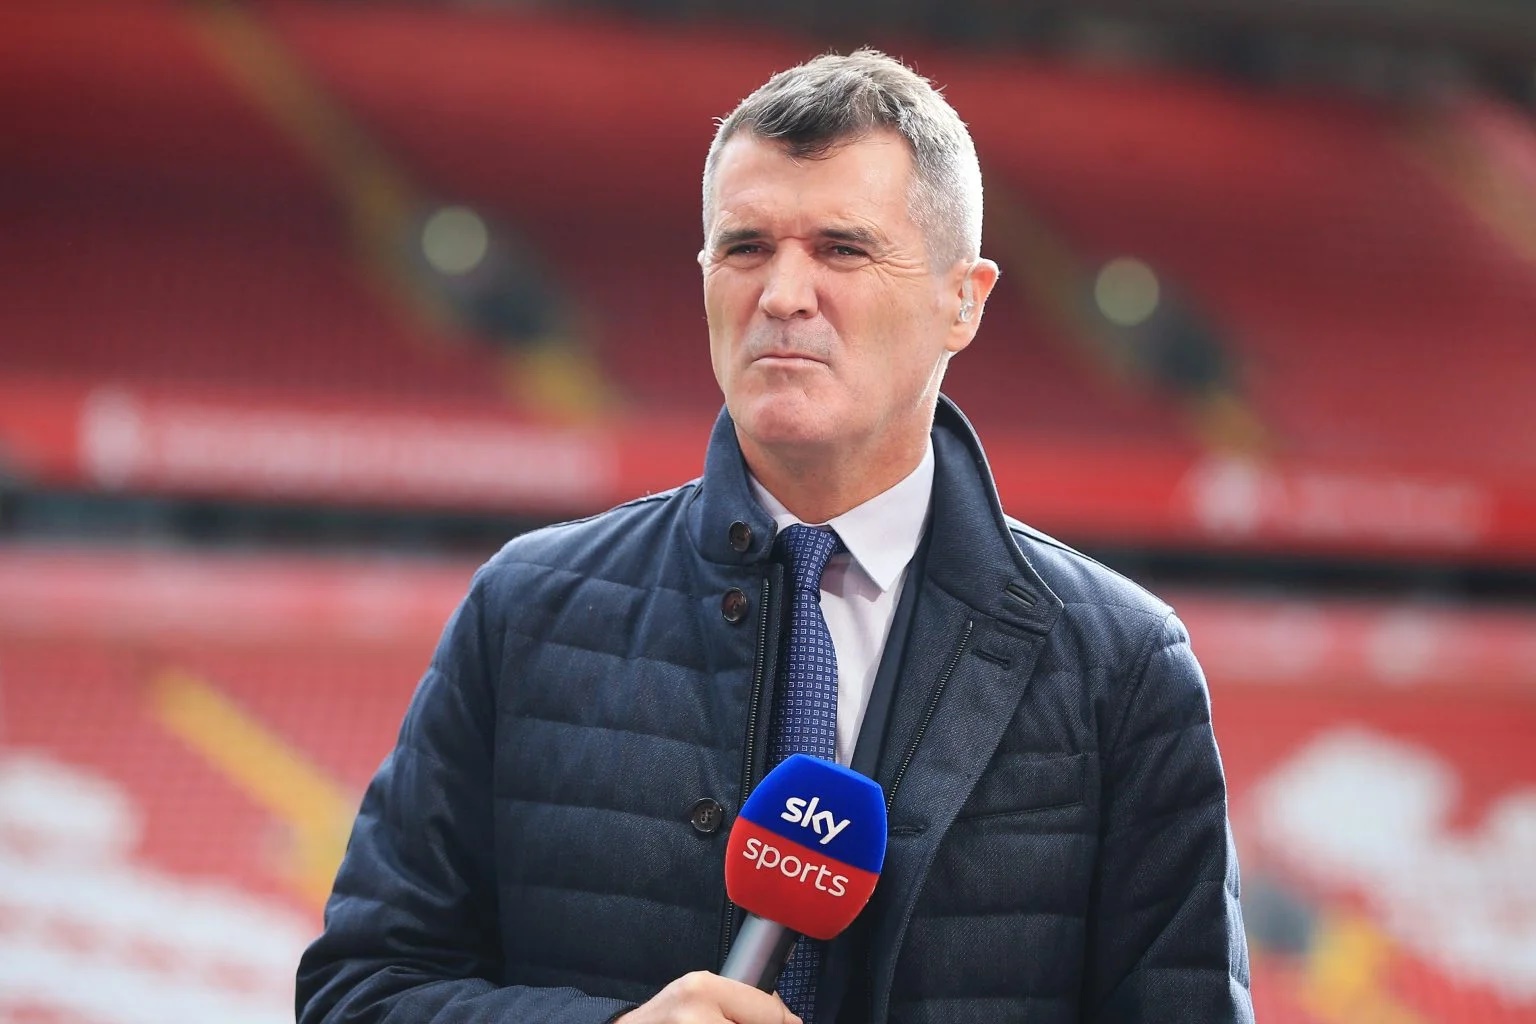 EPL: Roy Keane reveals ‘biggest worry’ over Man Utd’s new signing